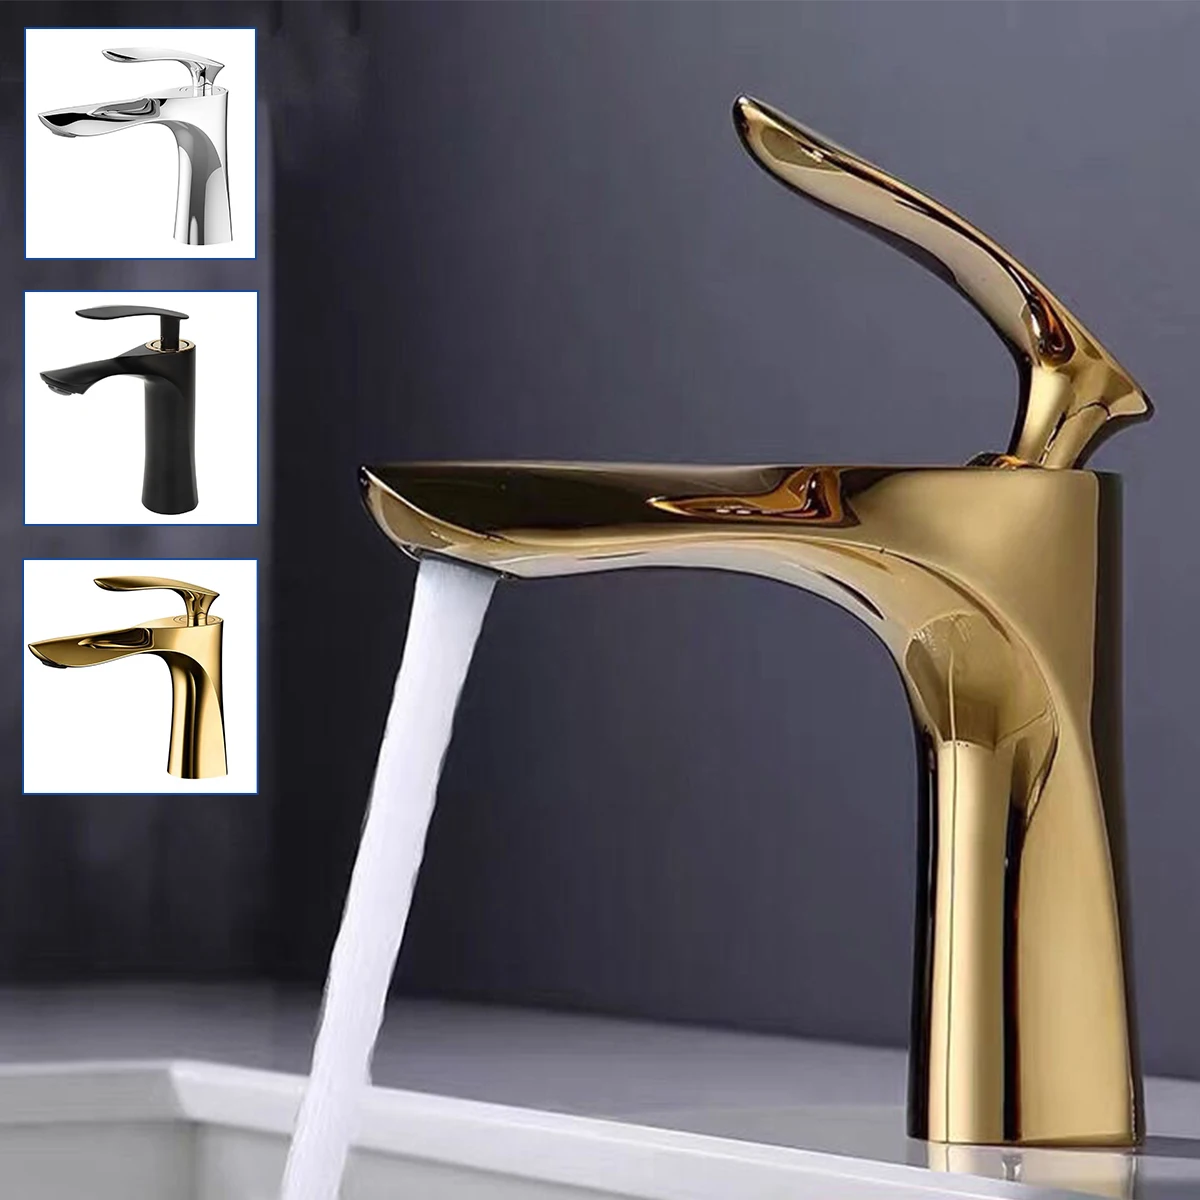 

Gold Faucet Basin Mixer Bathroom Single Handel Vanity Mixer Cold And Hot Water Wash Toilet Taps Bathroom Accesories